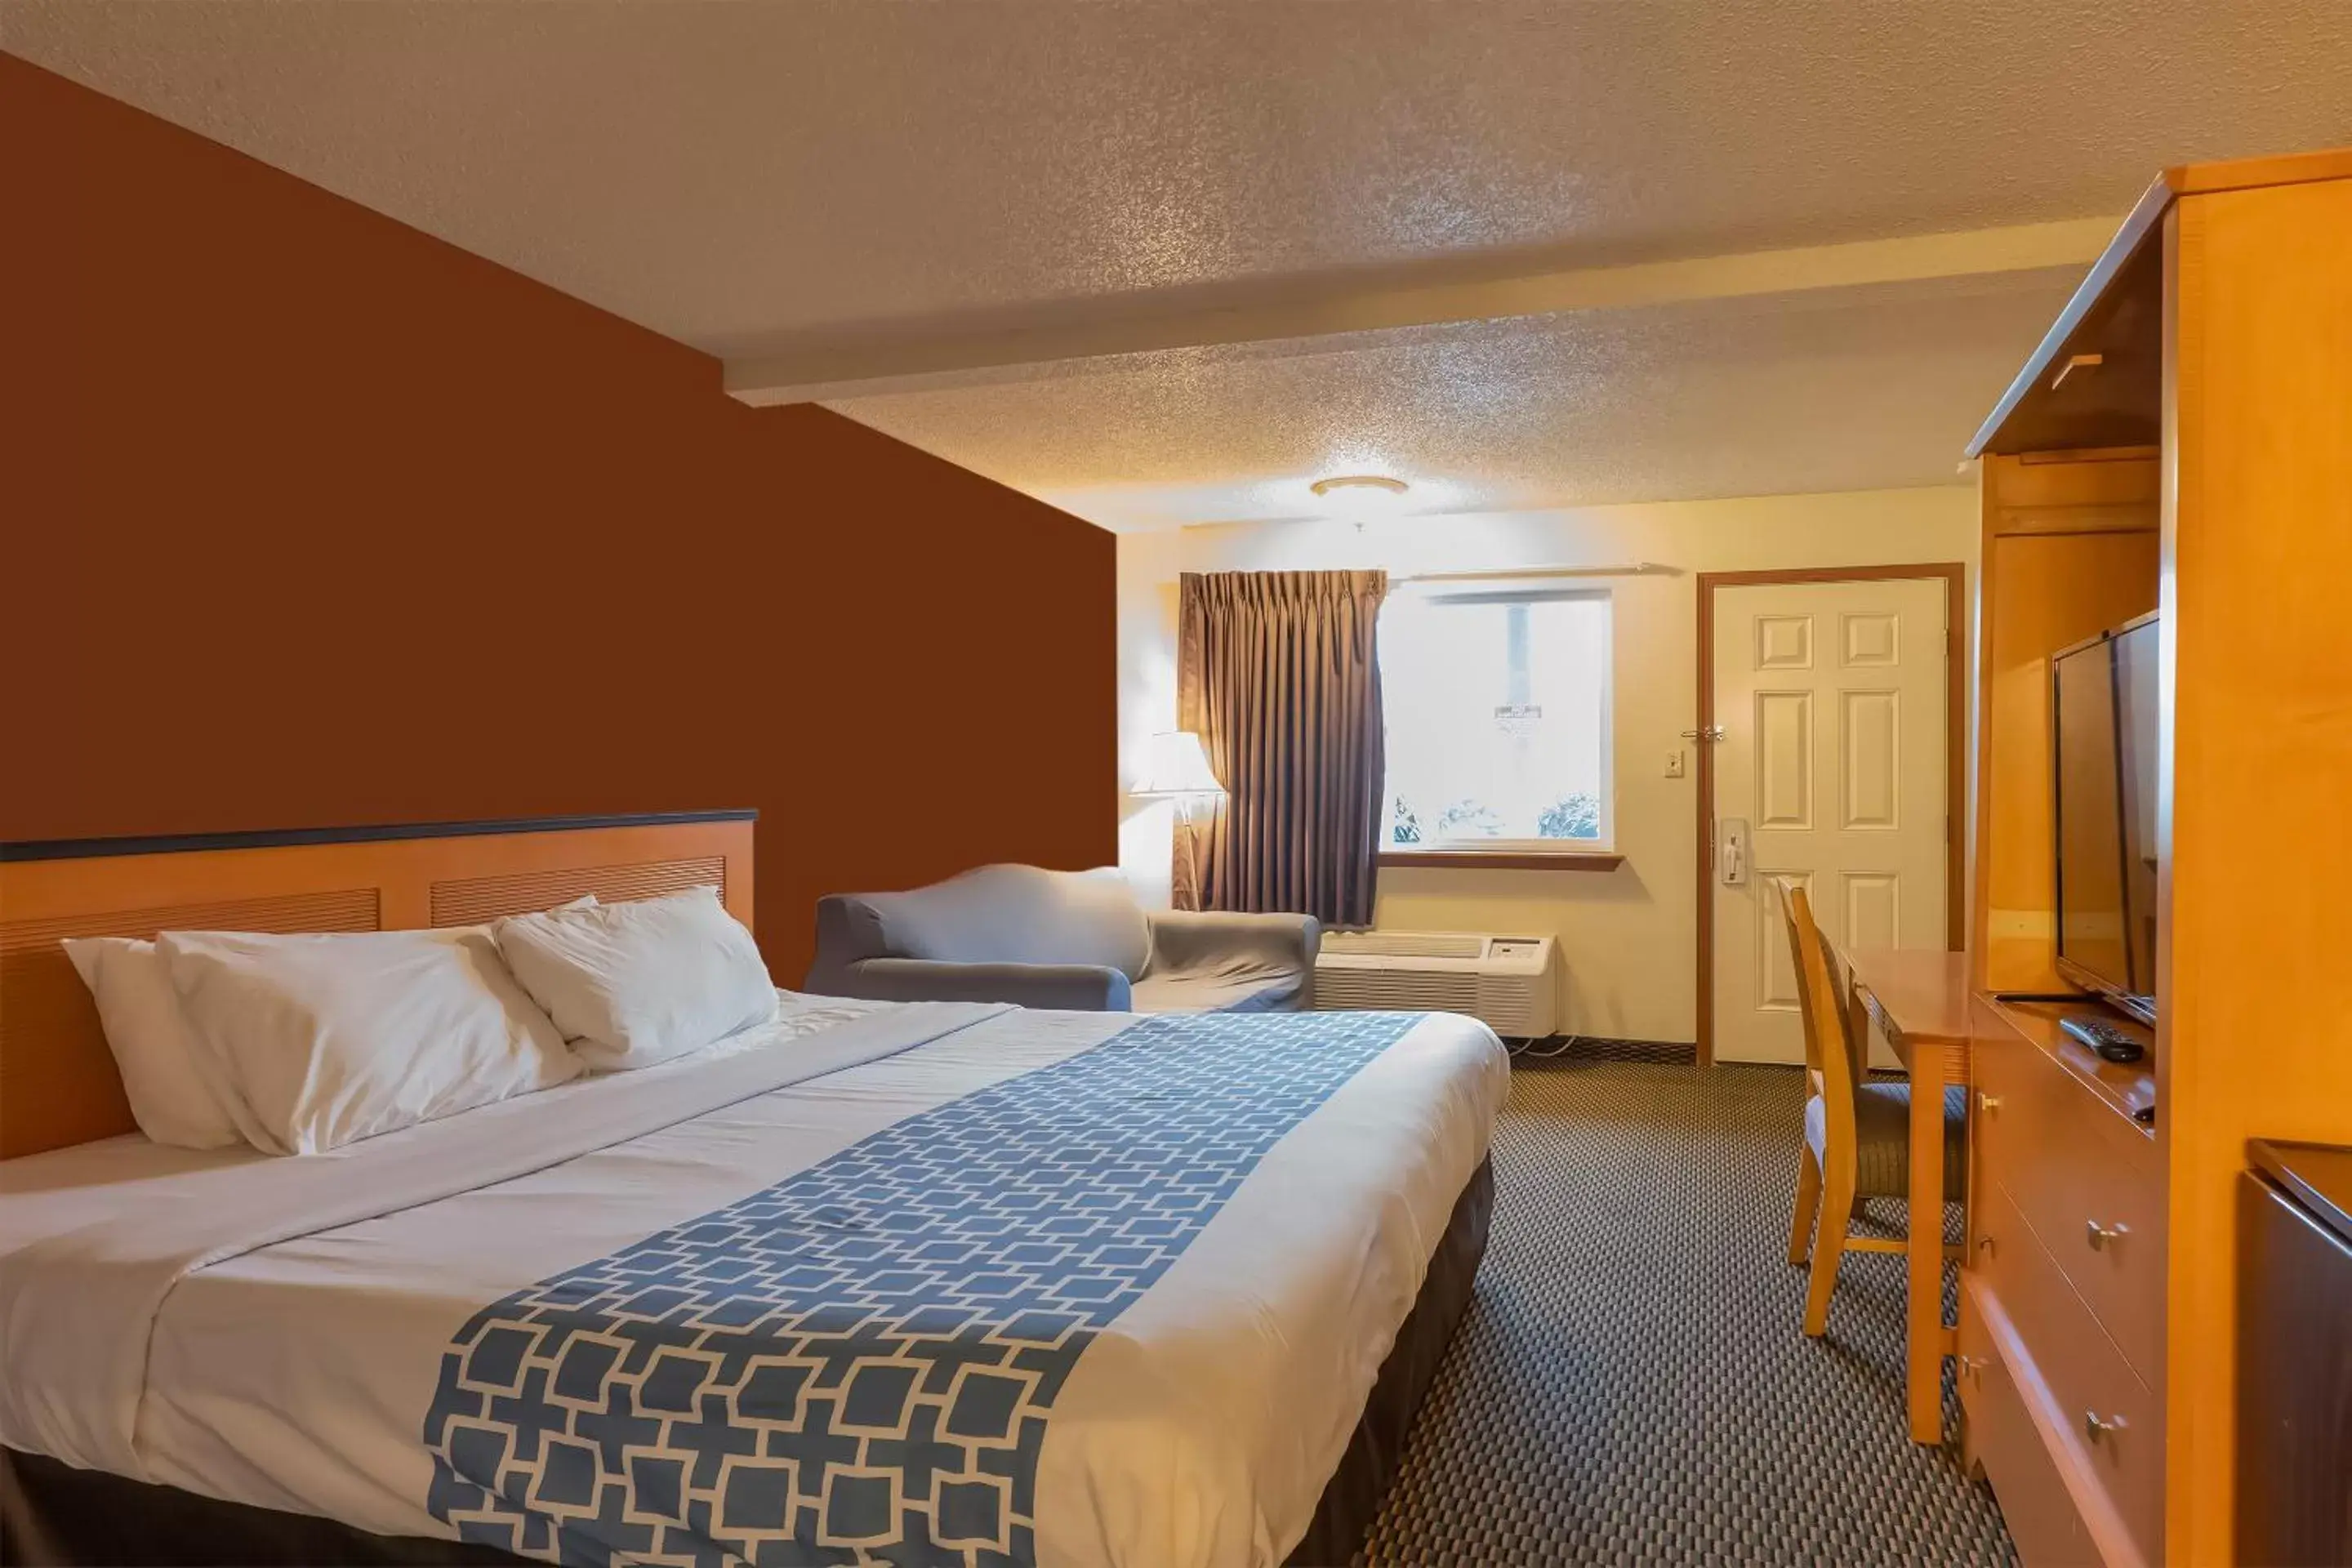 Bedroom in OYO Hotel Chehalis I-5 South